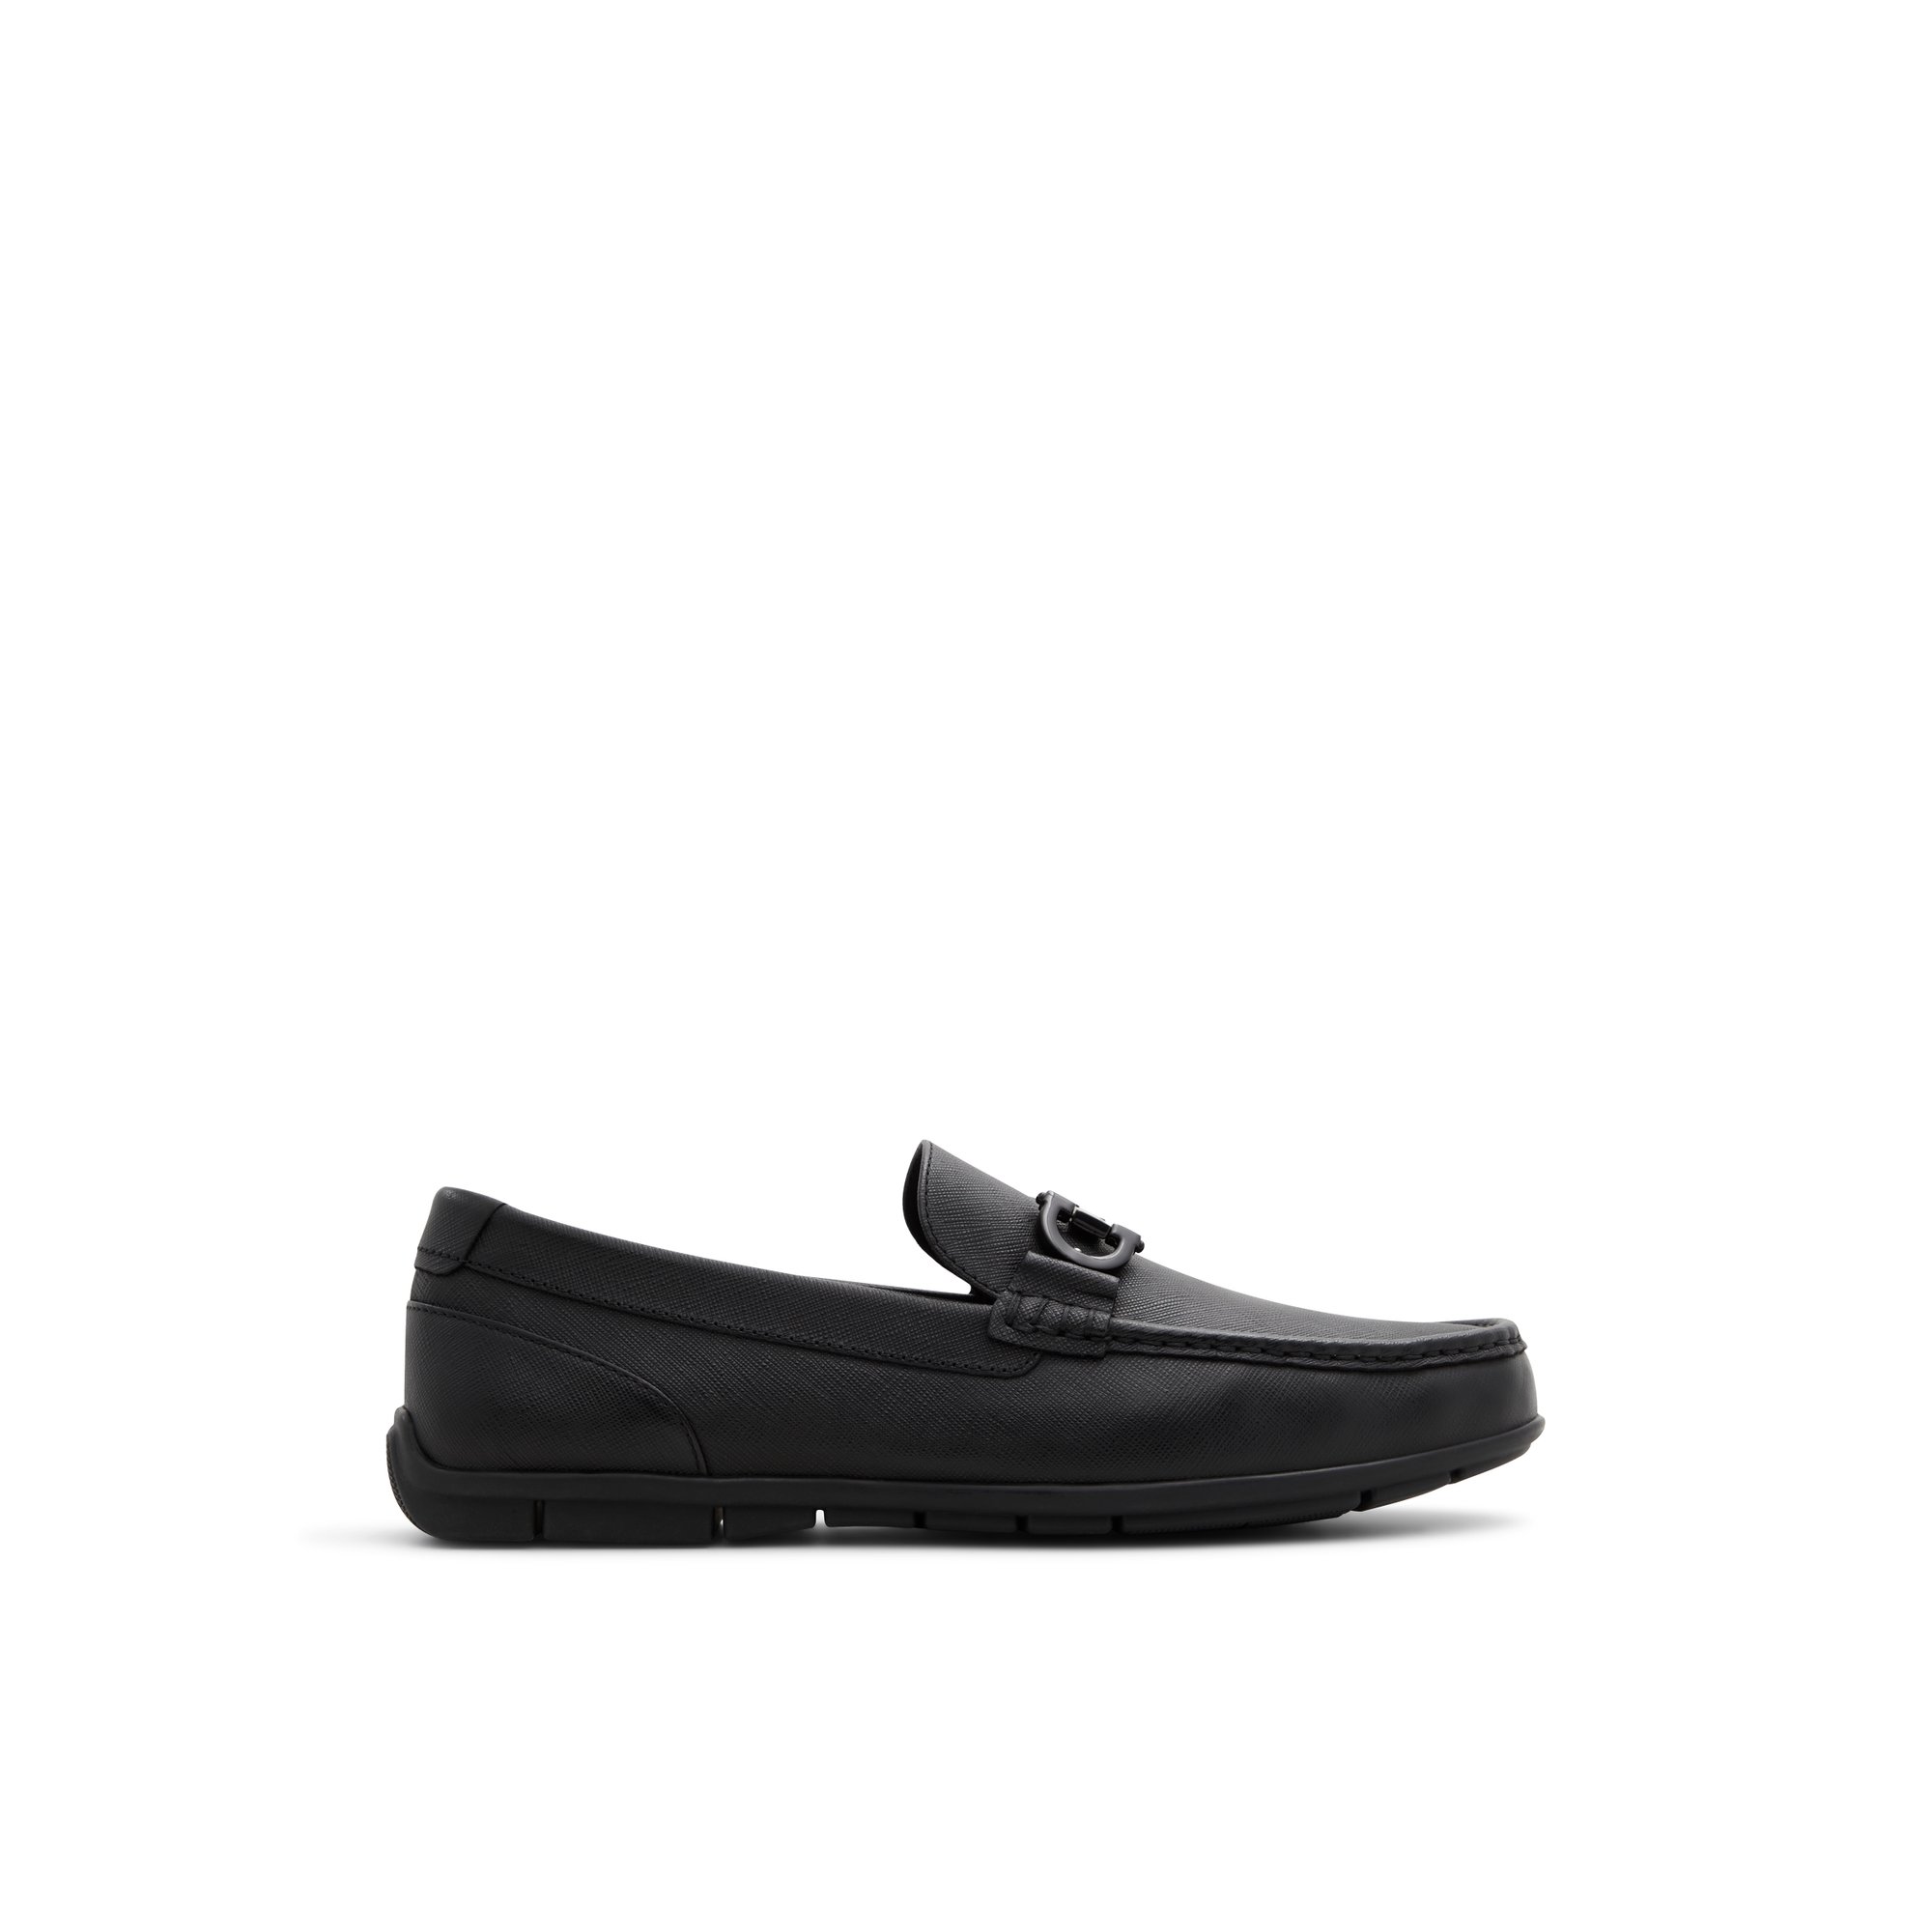 ALDO Orlovoflex - Men's Loafers and Slip on - Black